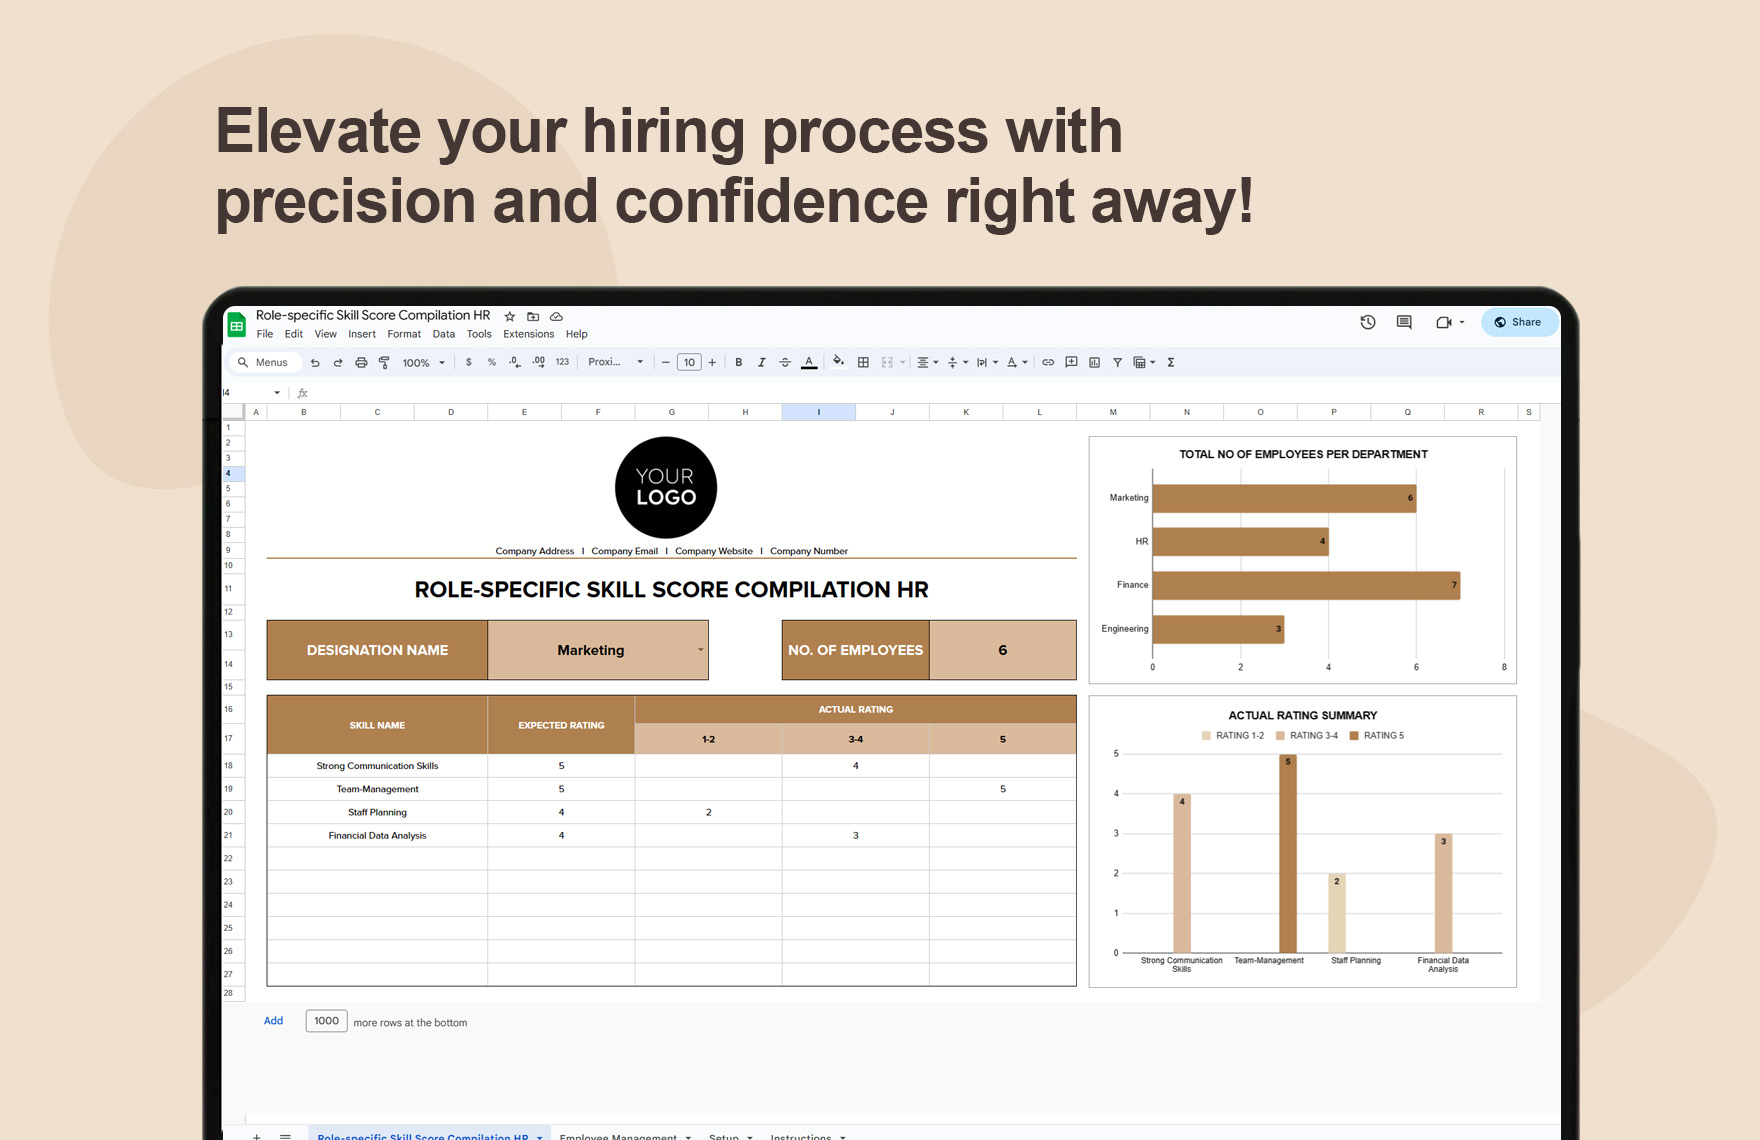 Role-specific Skill Score Compilation HR Template